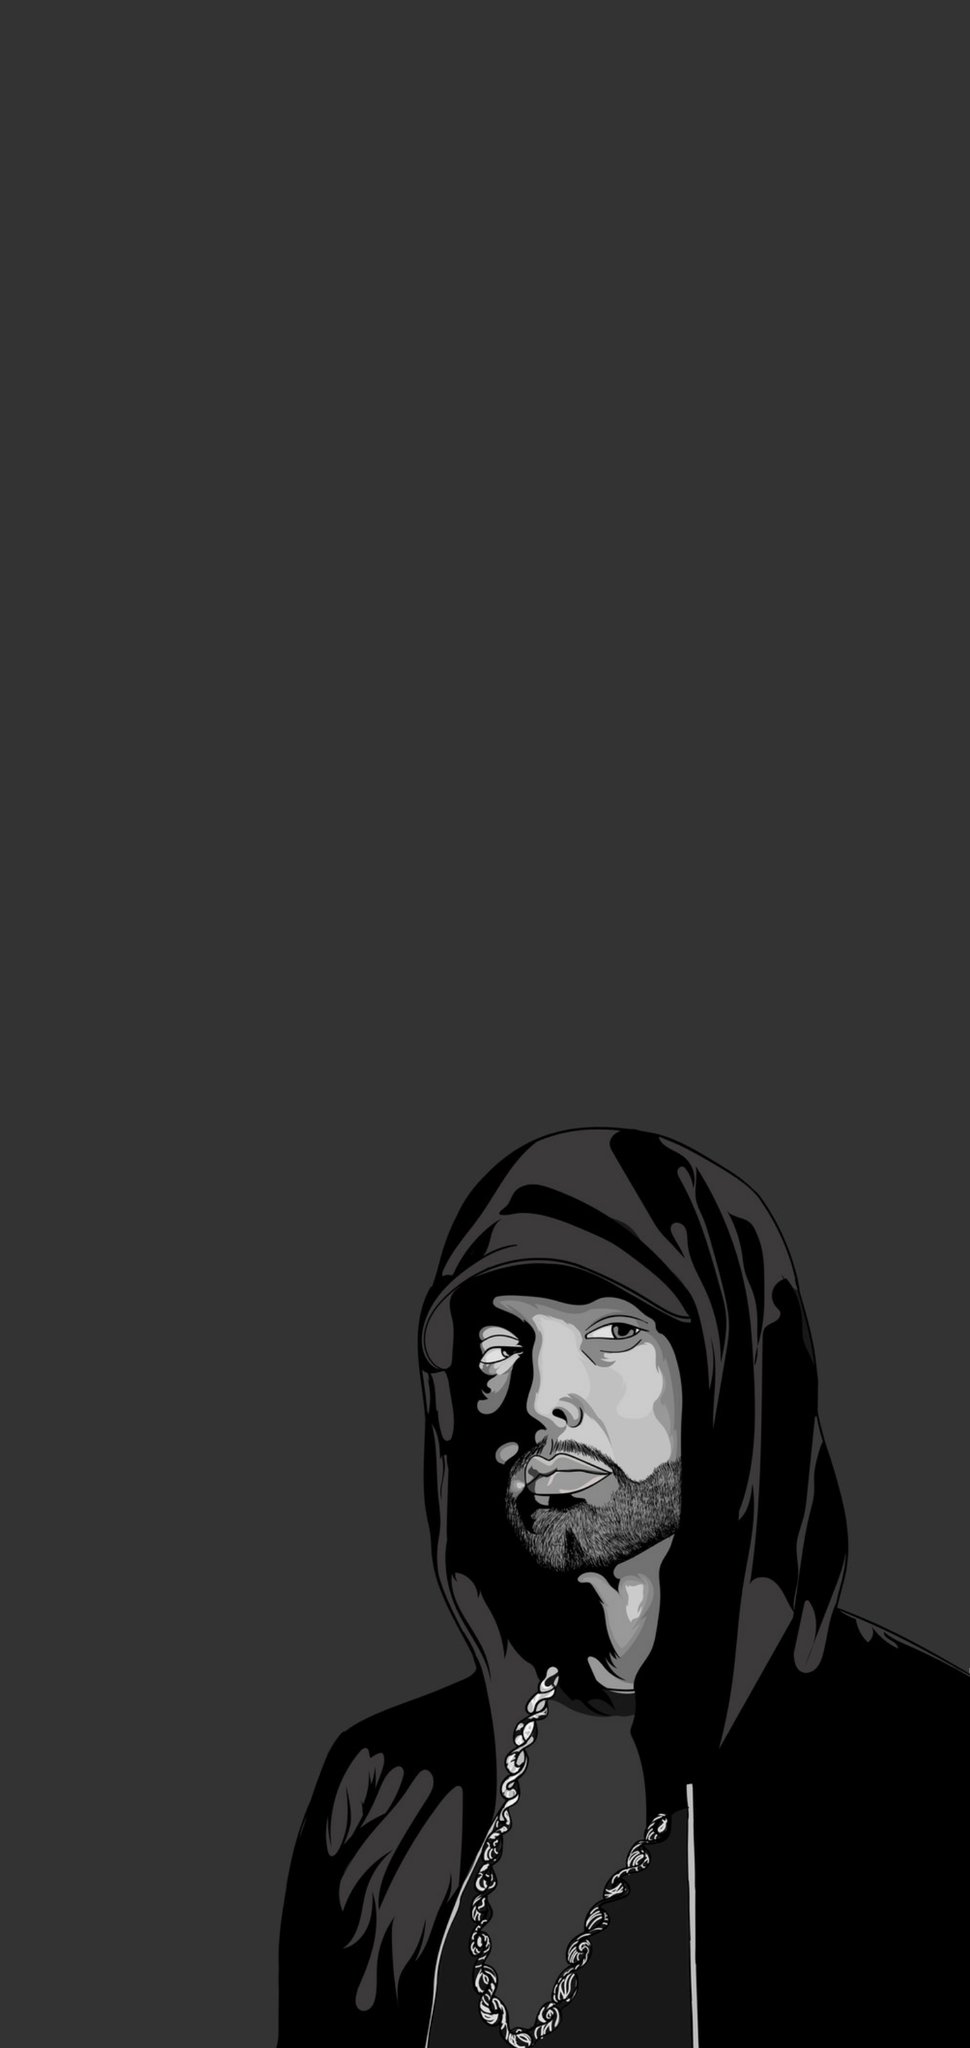 New Pics Of Eminem Wallpapers